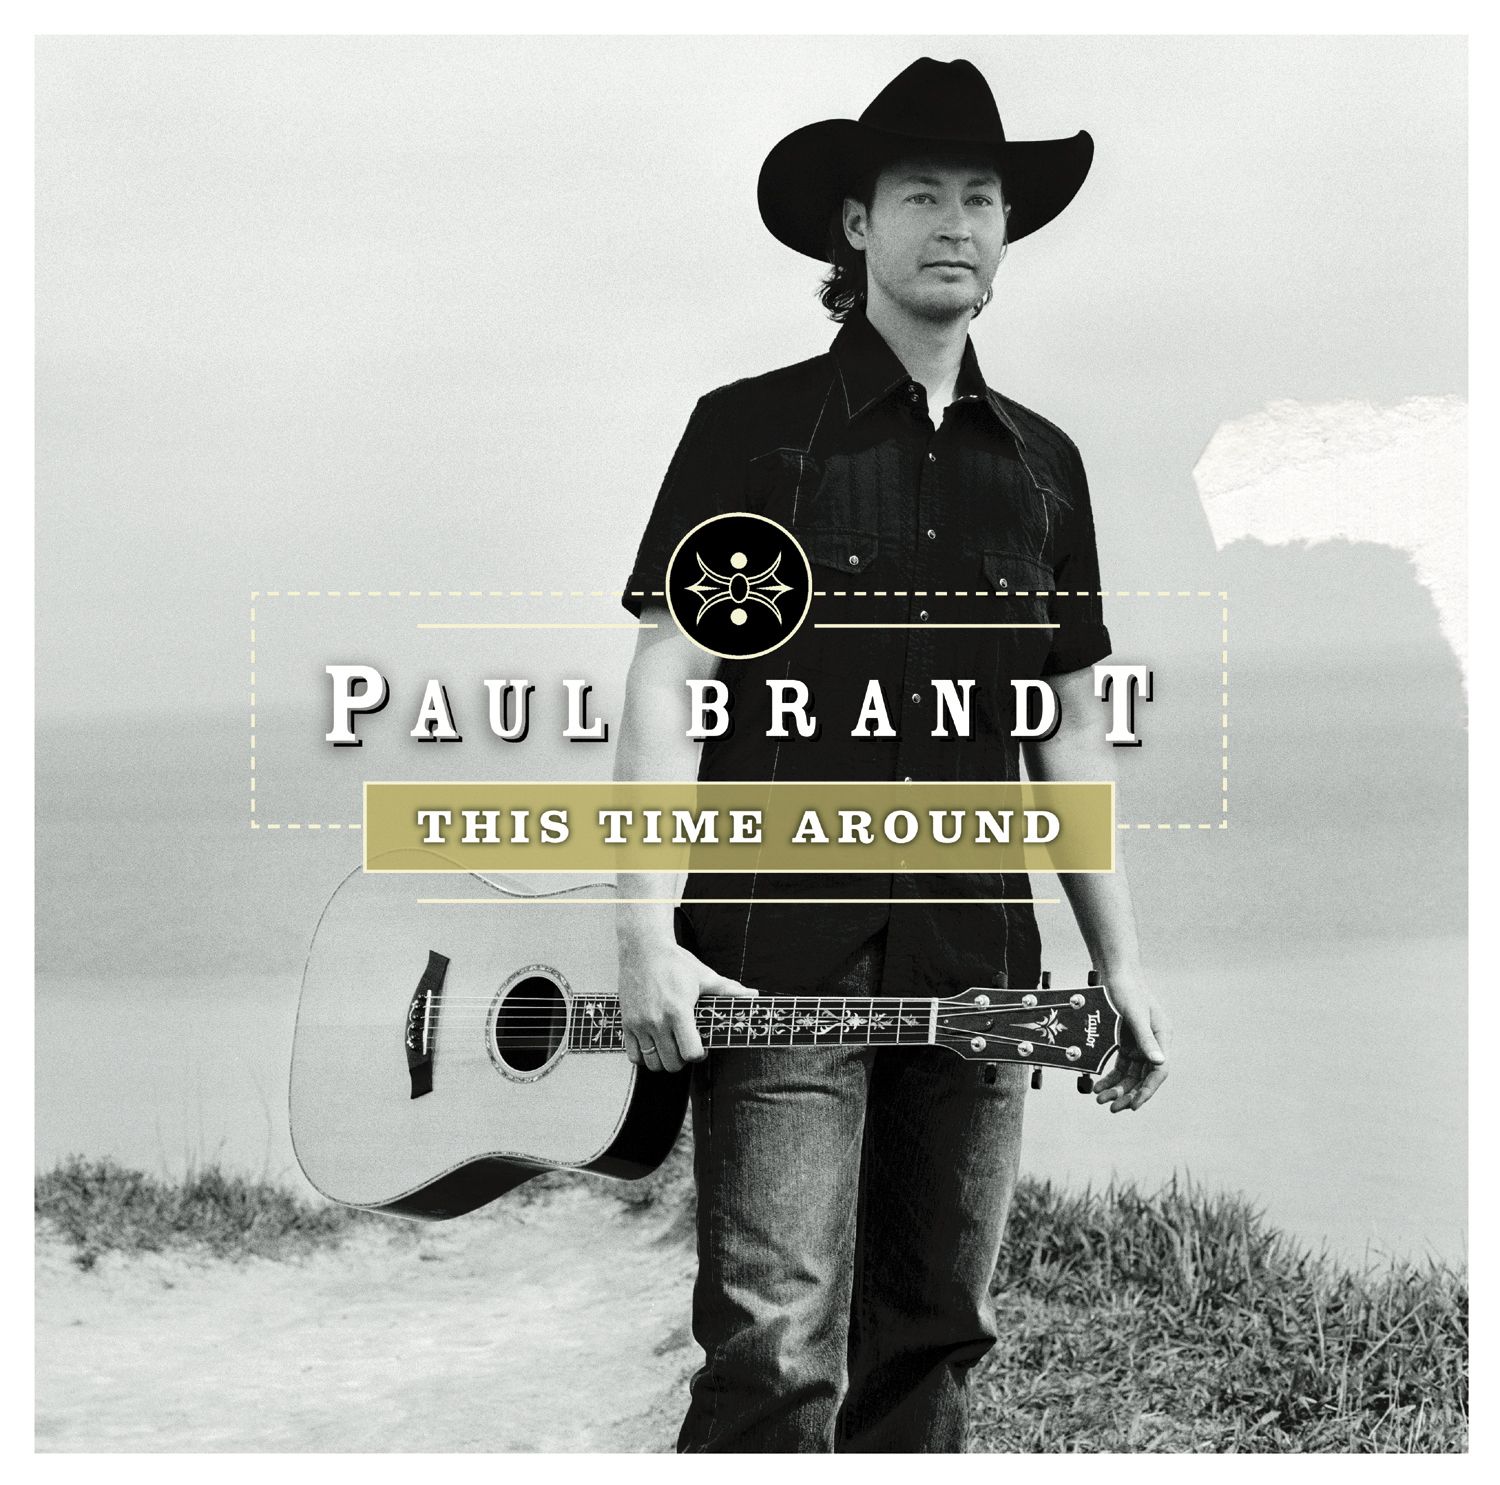 Brandt, Paul - This Time Around